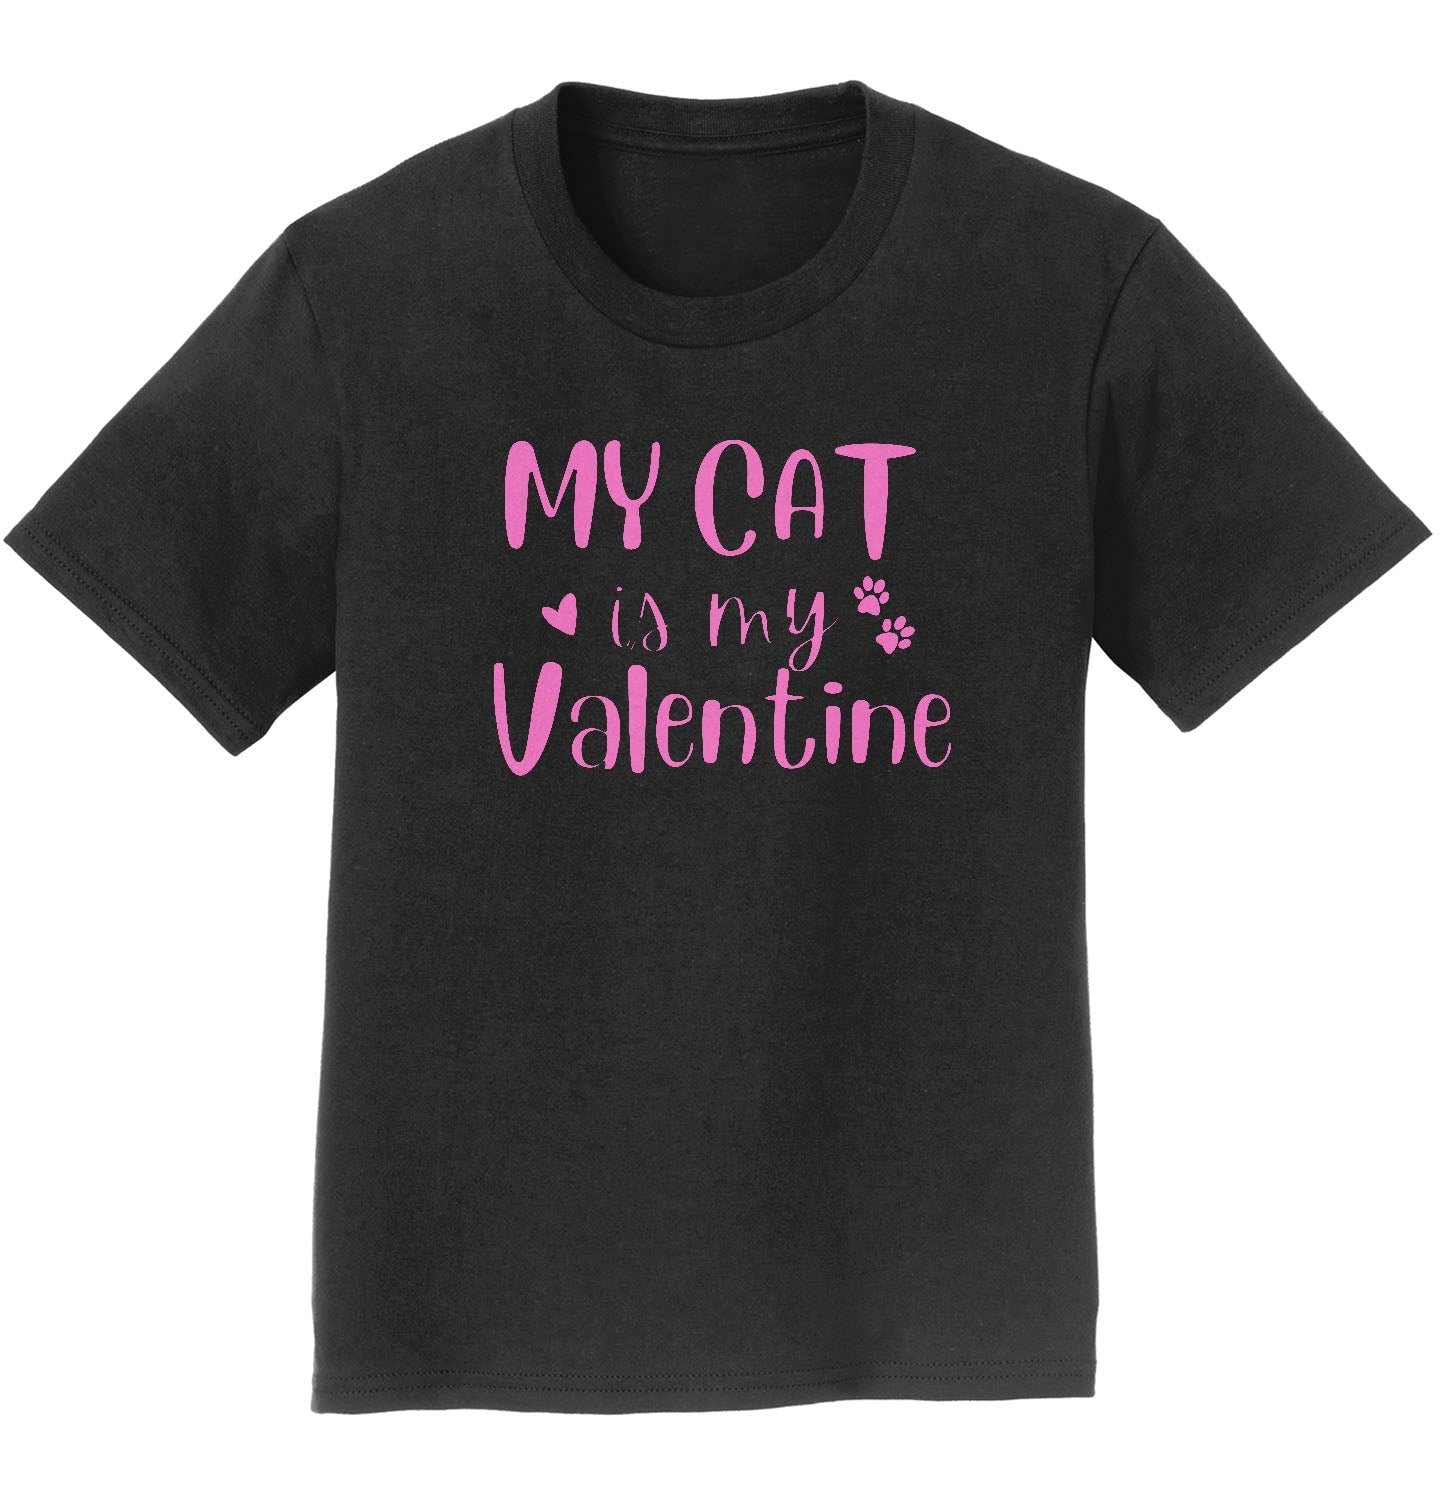 My Cat Valentine - Kids' Unisex T-Shirt